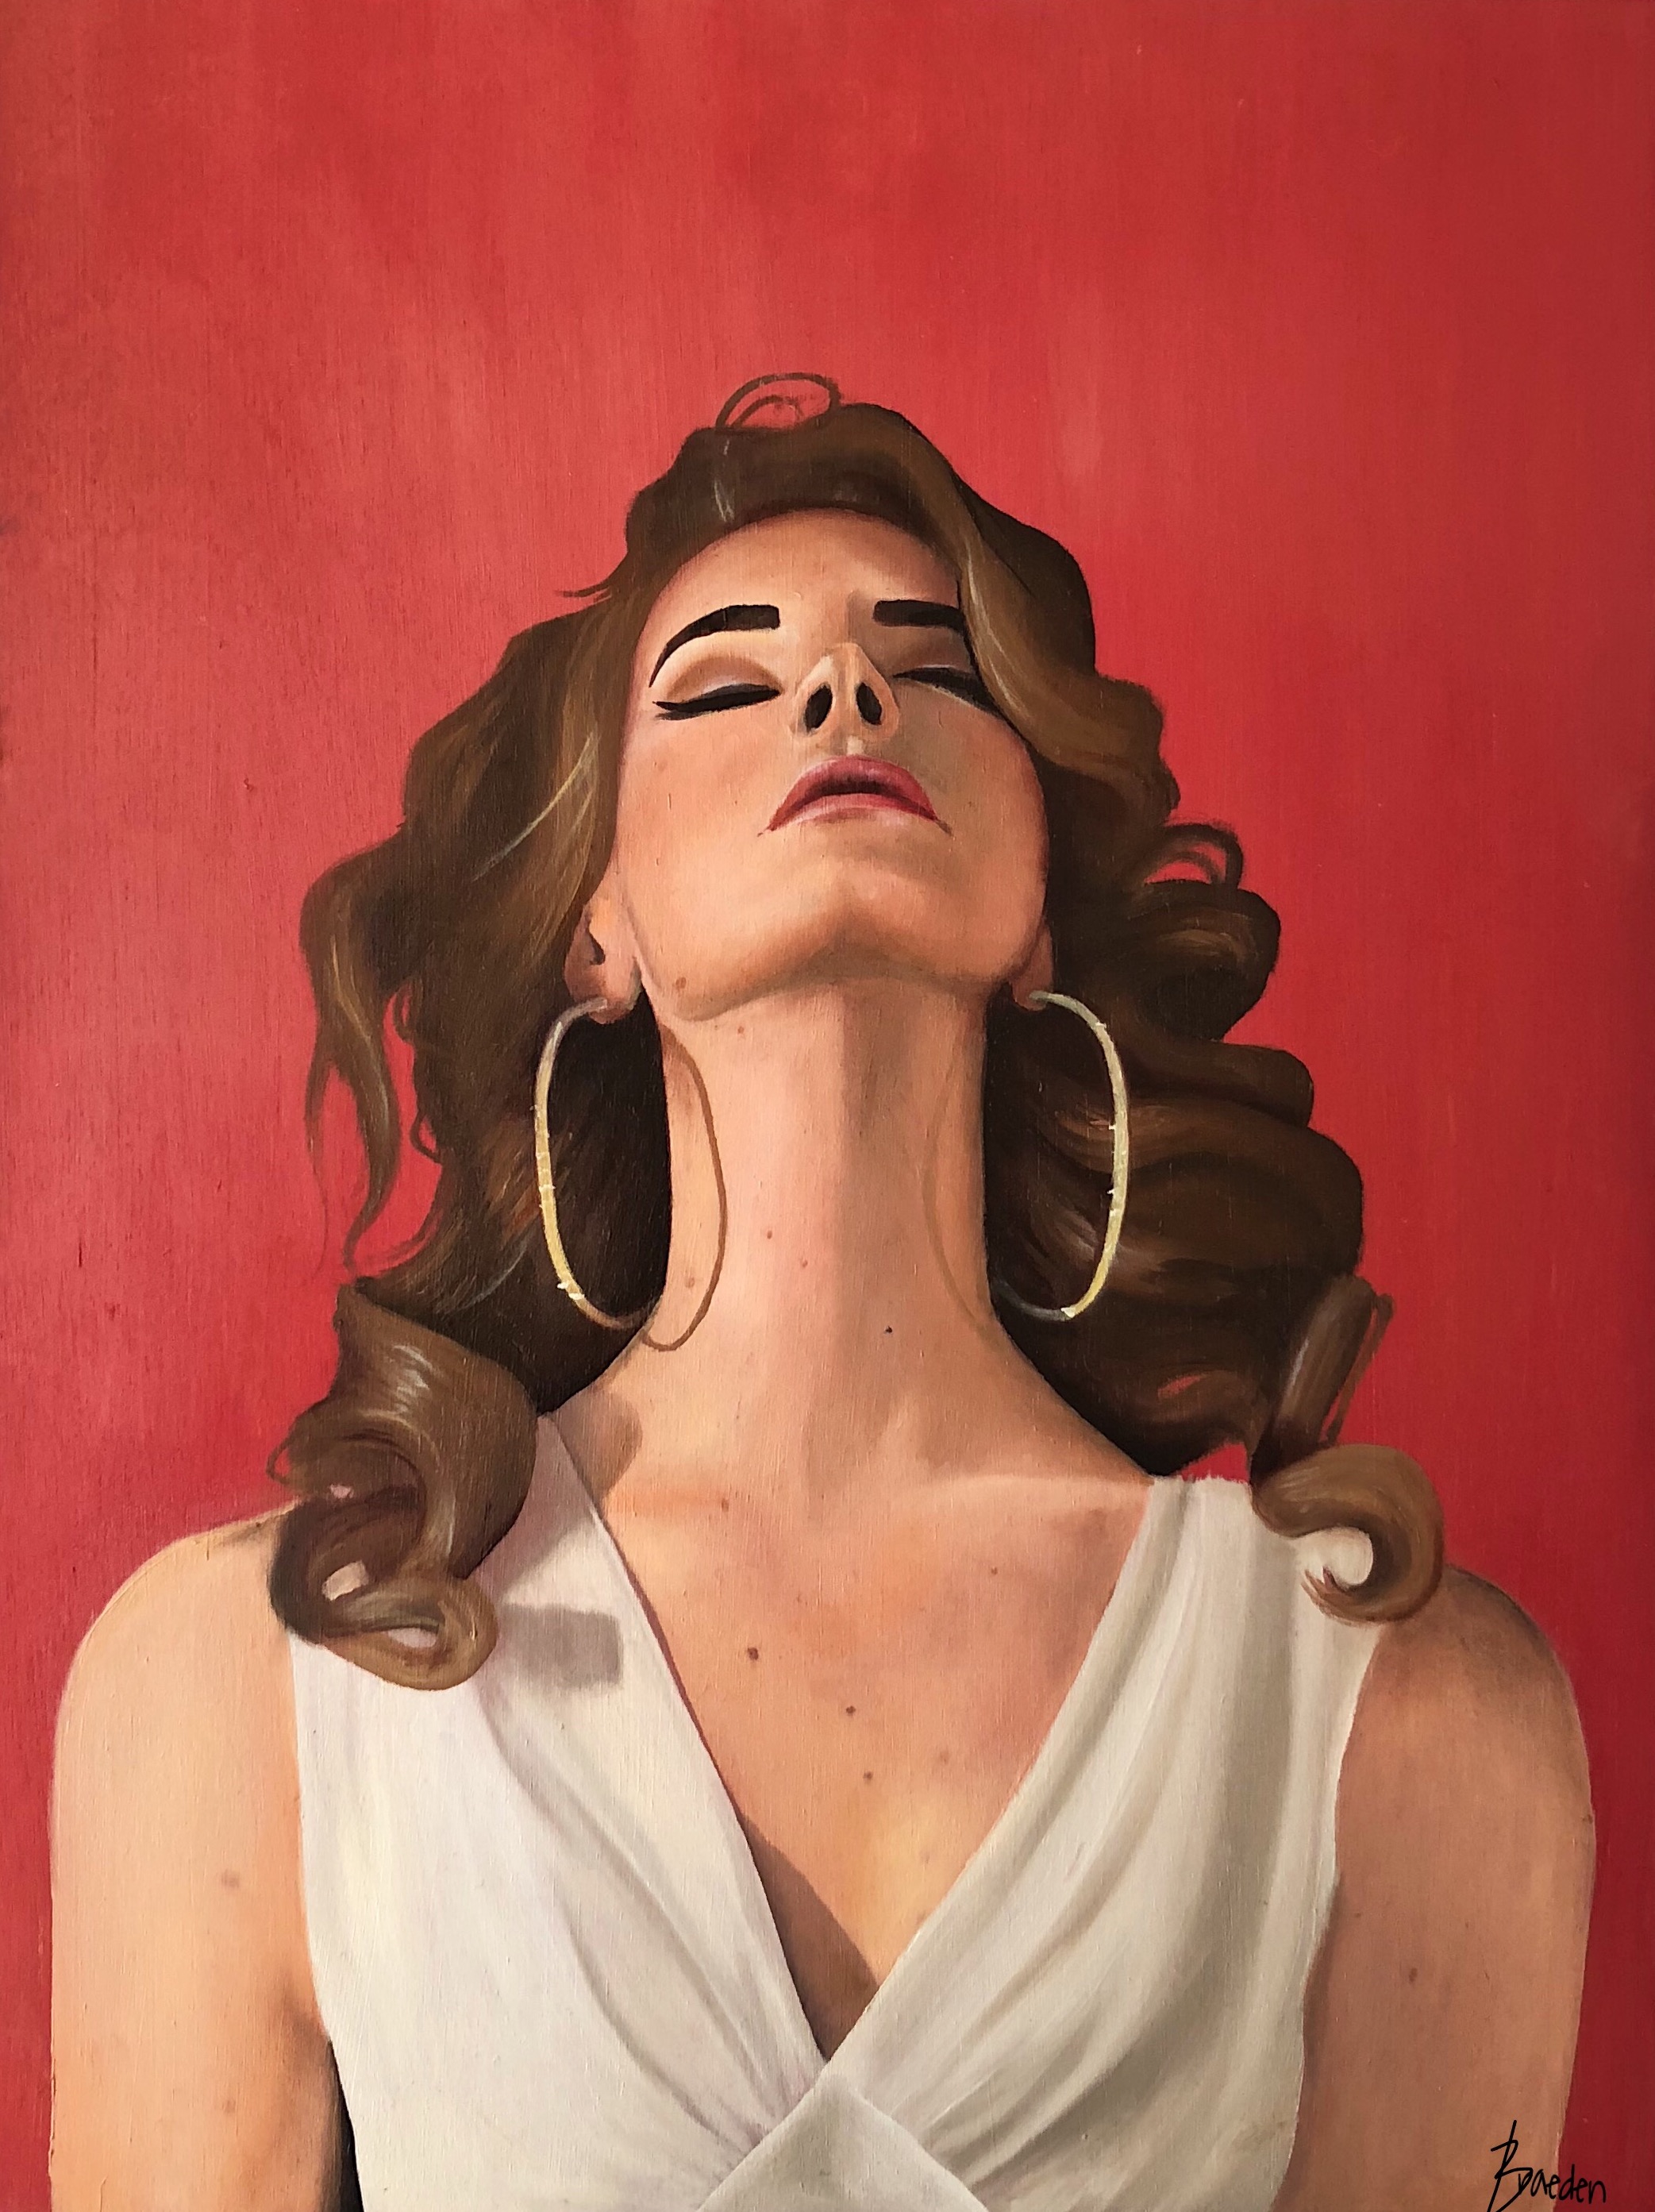  Lana Del Ray Portrait  oil paint on wood panel   